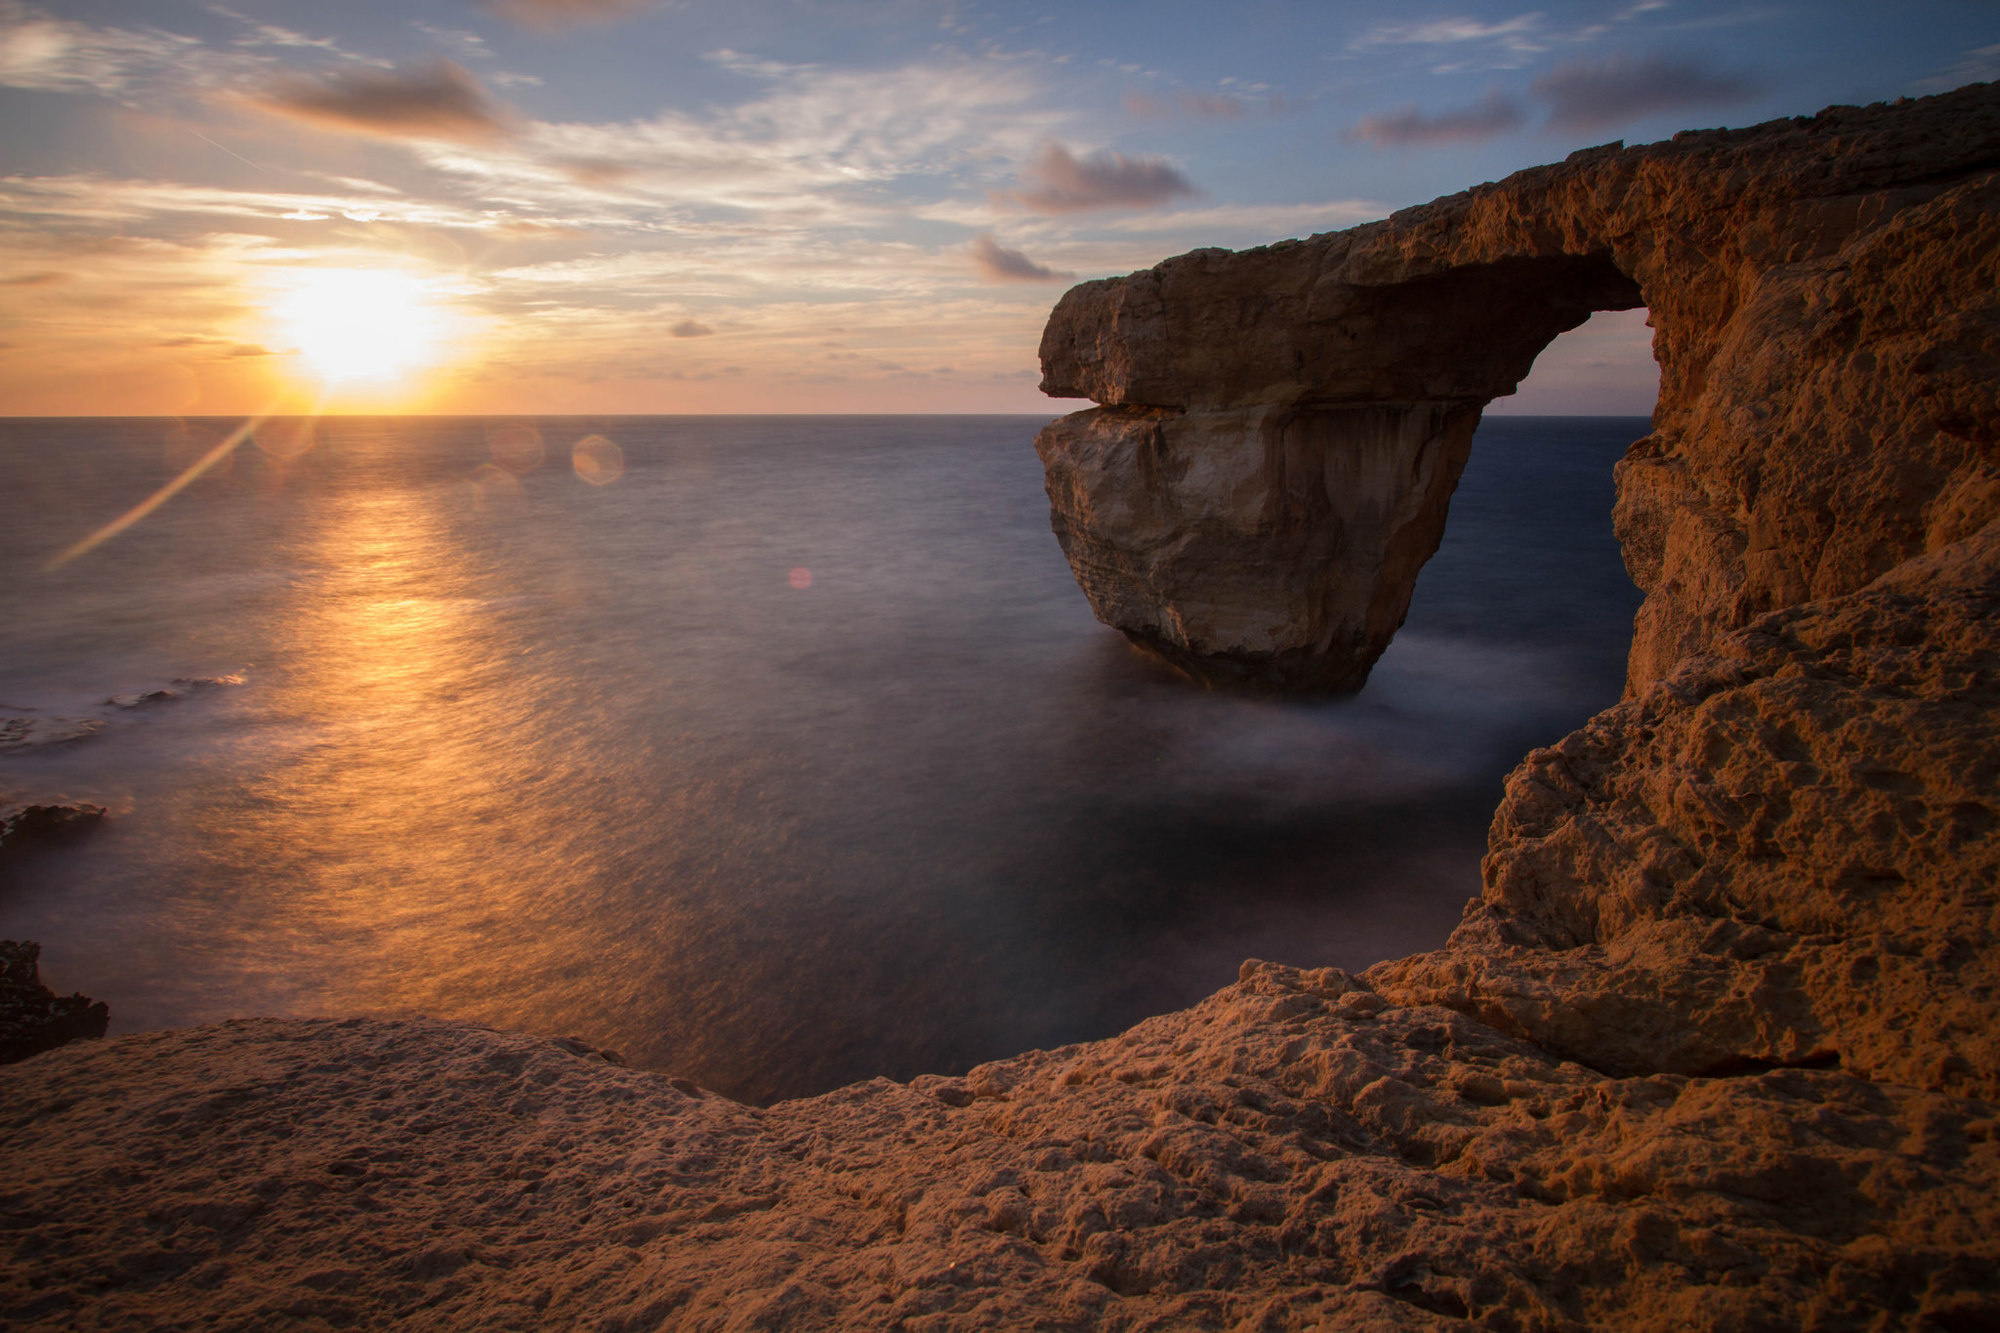 The Azur Window in Malta